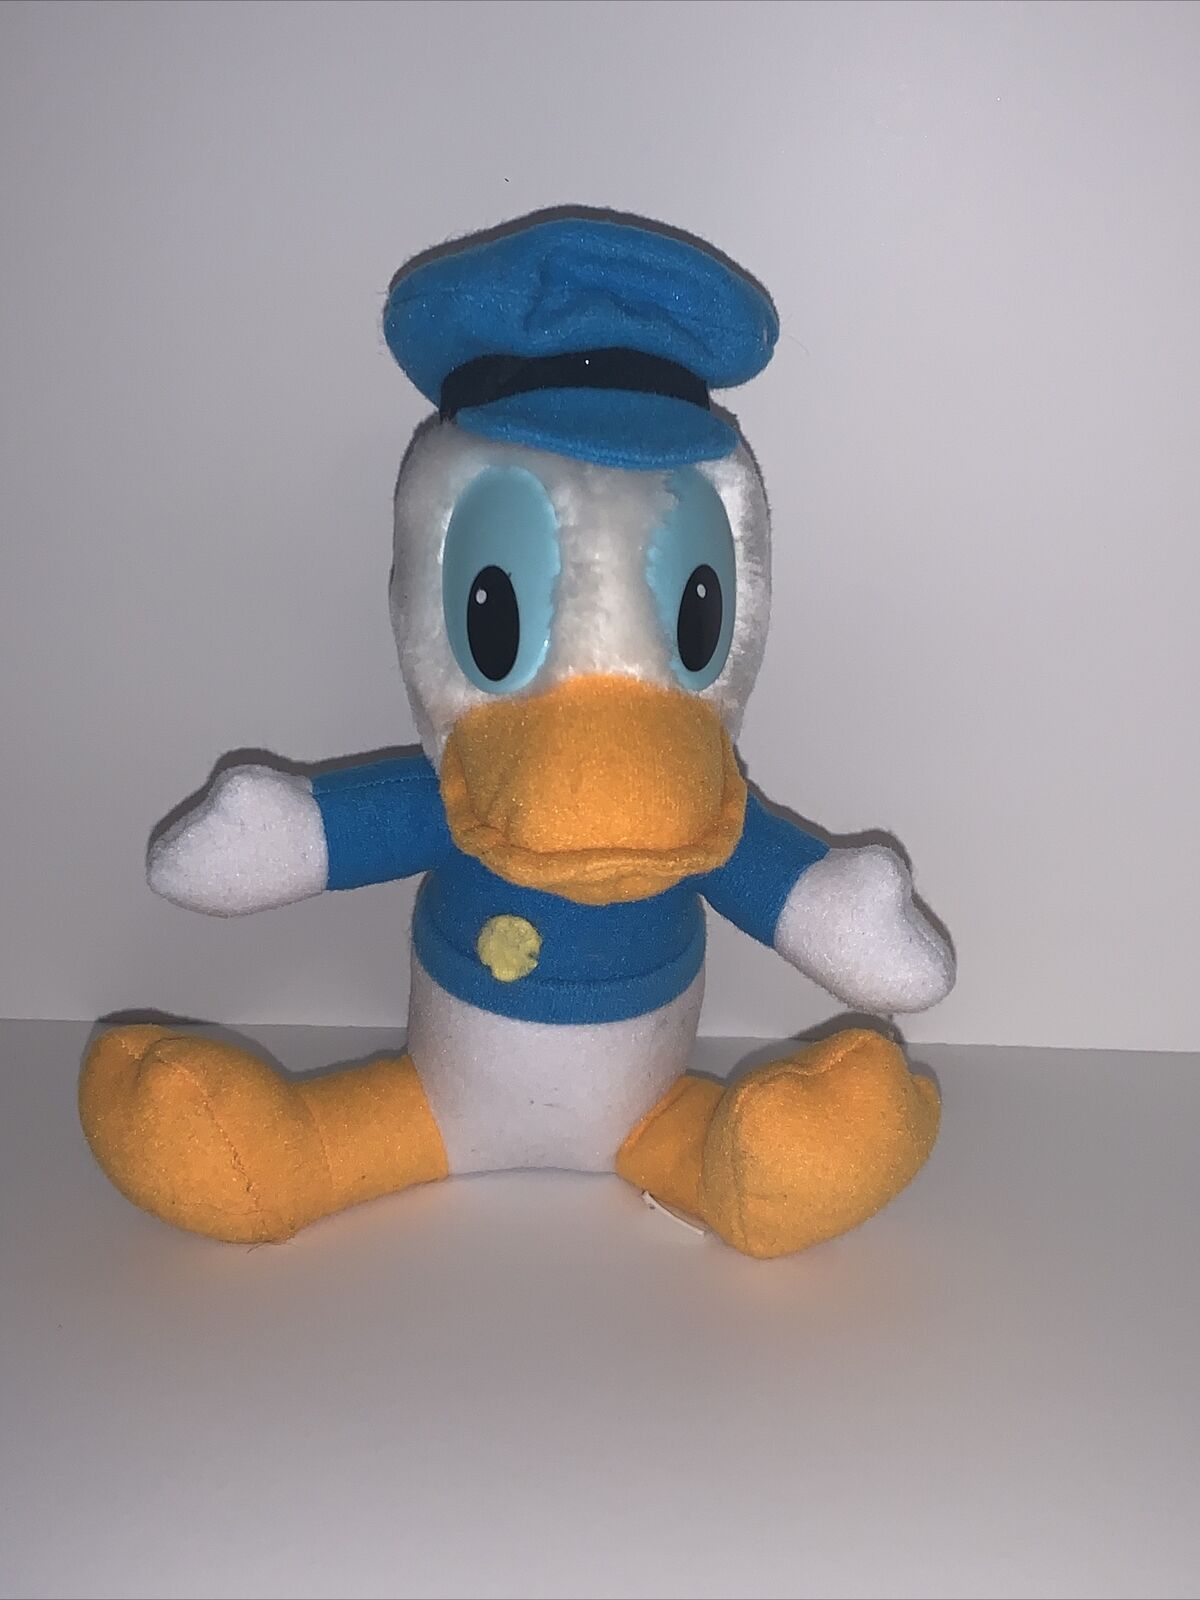 Donald Duck Plush Stuffed Animal - Mickeys Christmas Carol - Walt Disney